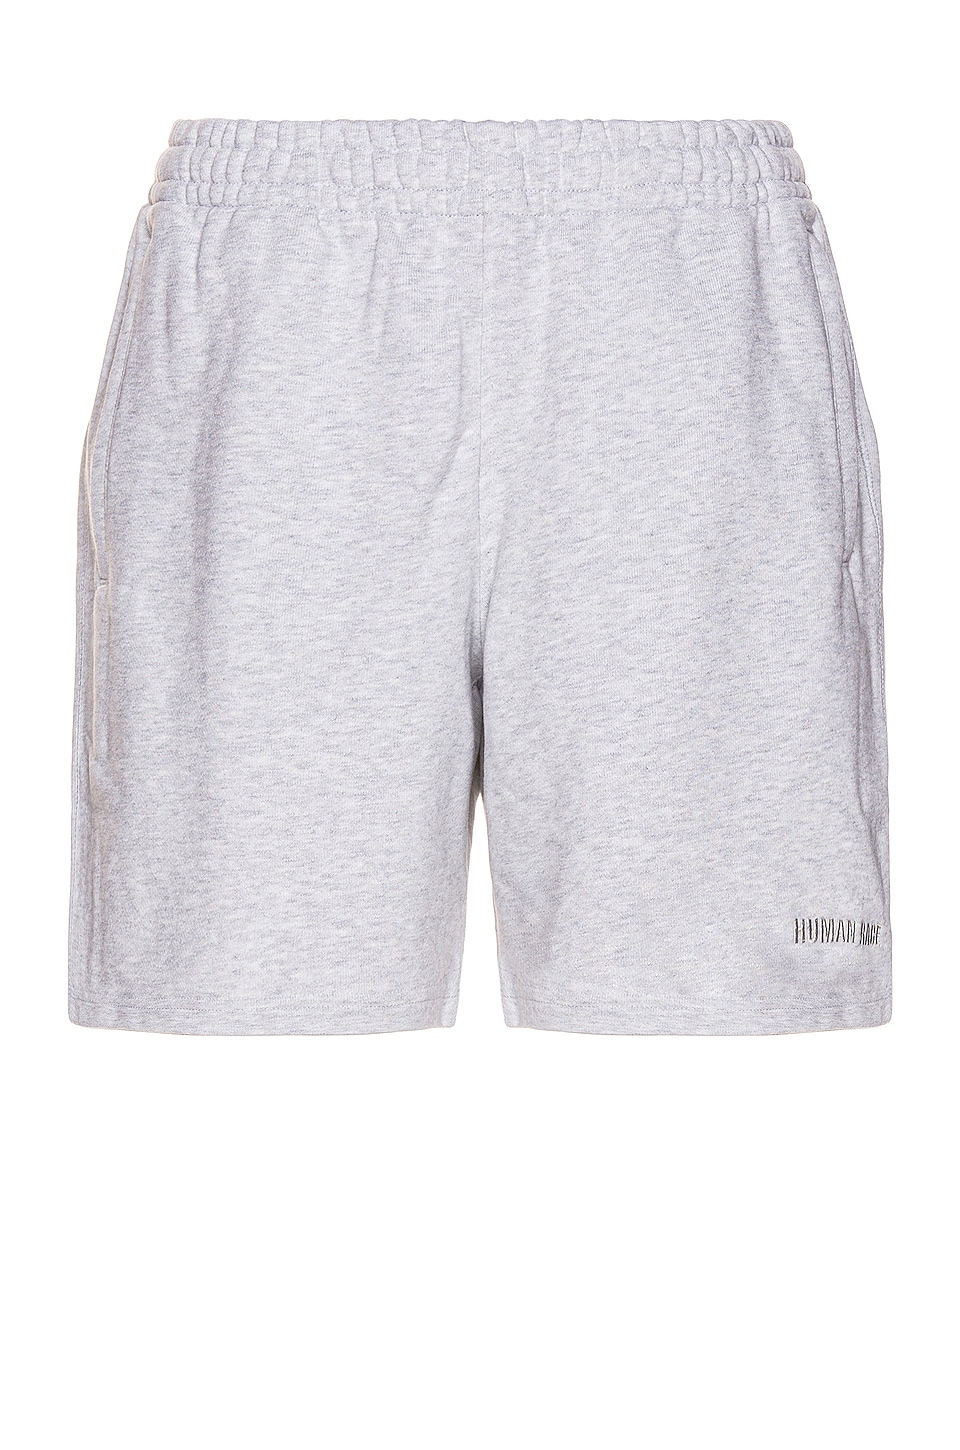 light grey adidas shorts